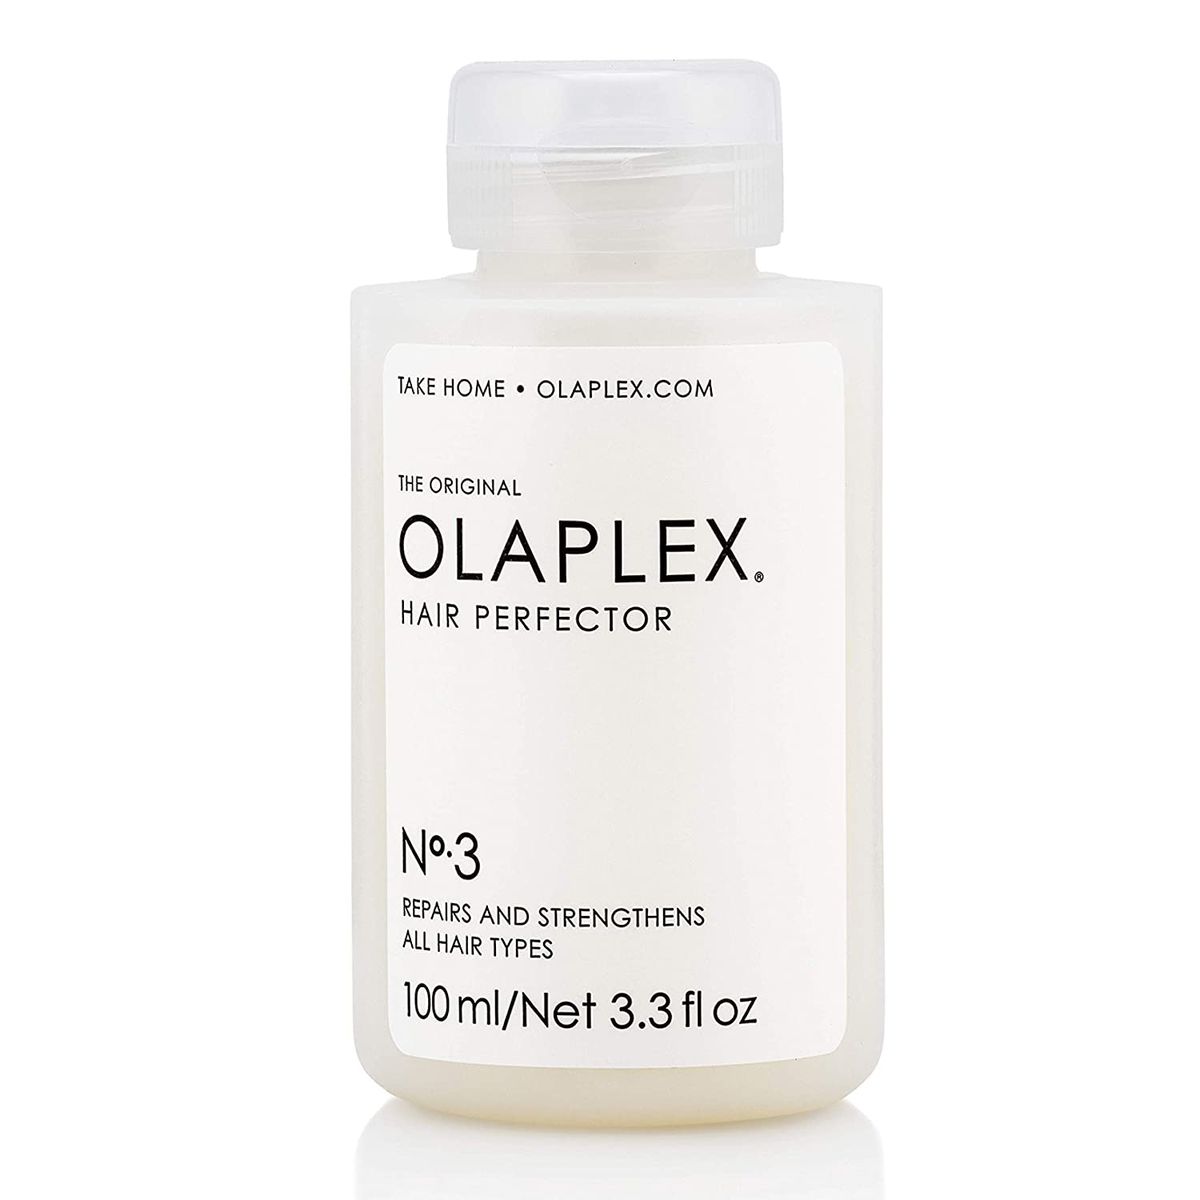 OLAPLEX Olaplex Hair Perfector No. 3